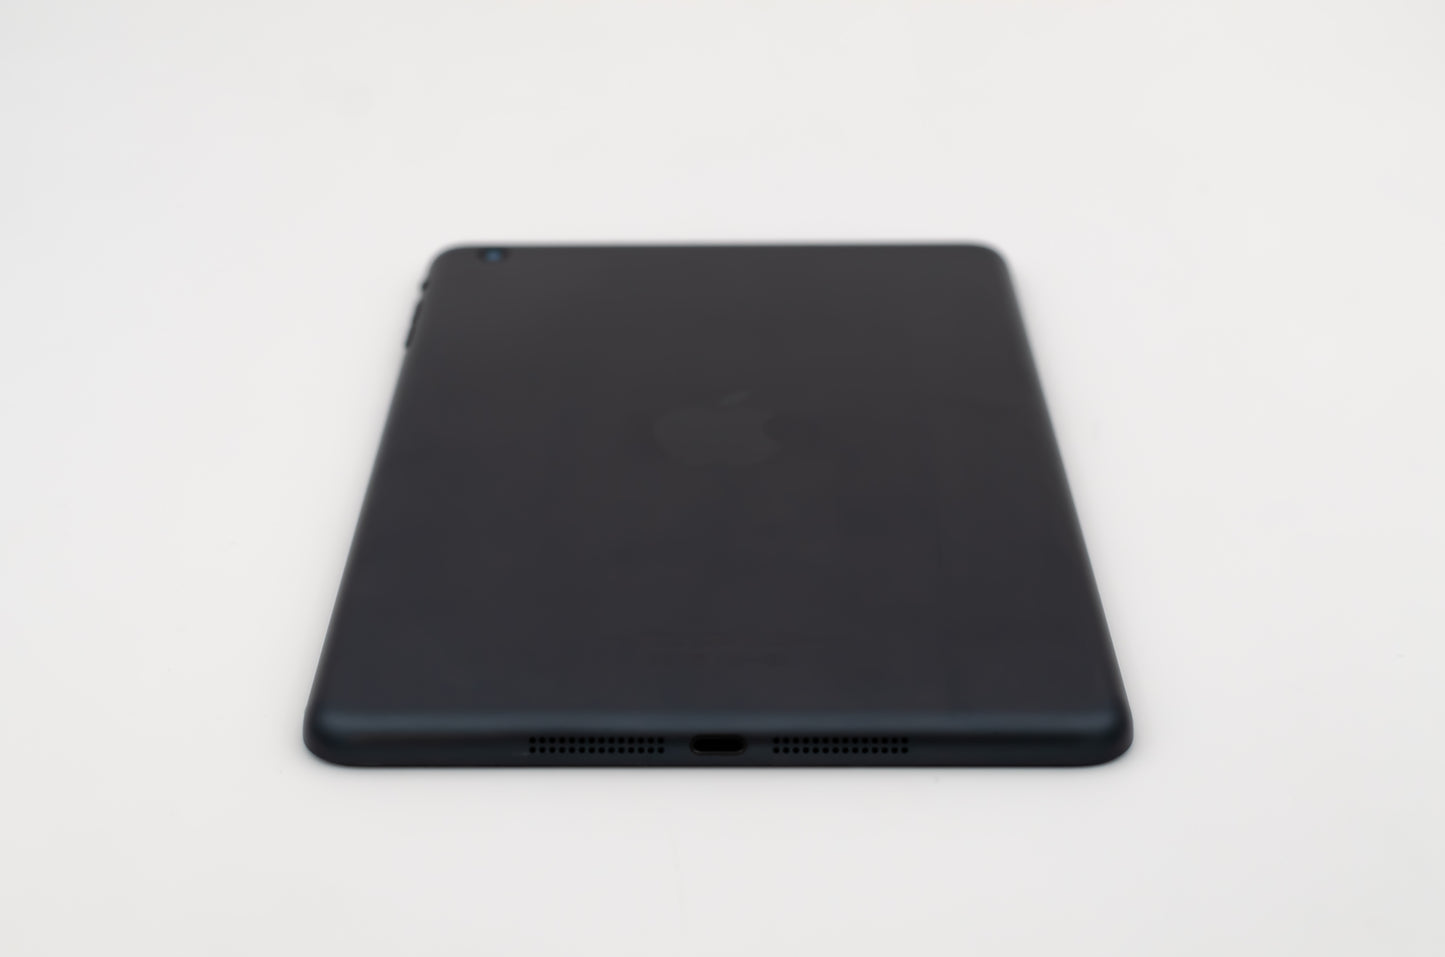 apple-2012-7.9-inch-ipad-mini-1-a1432-slate/black-4